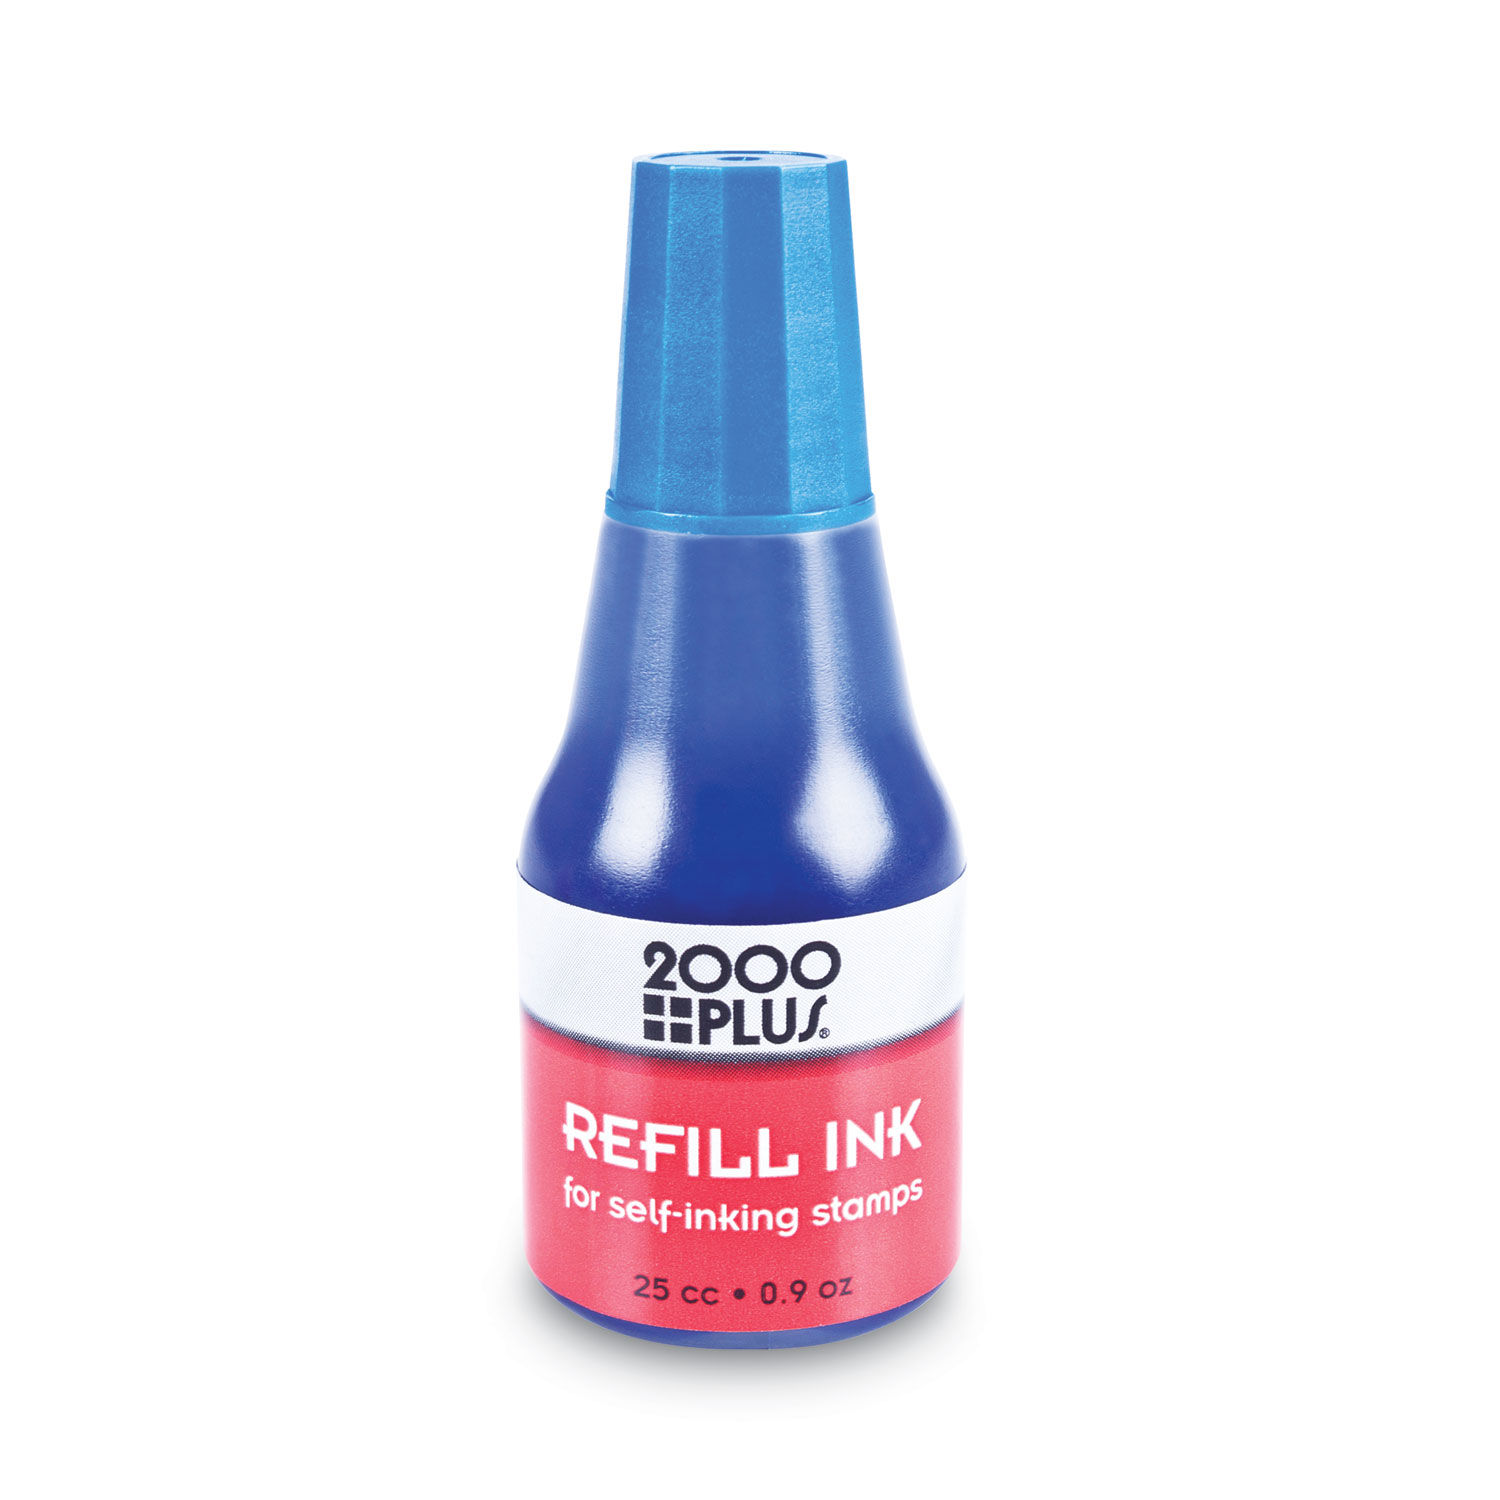 Black Ink Refill for Pre-Inked Stamp - 0.5 Oz